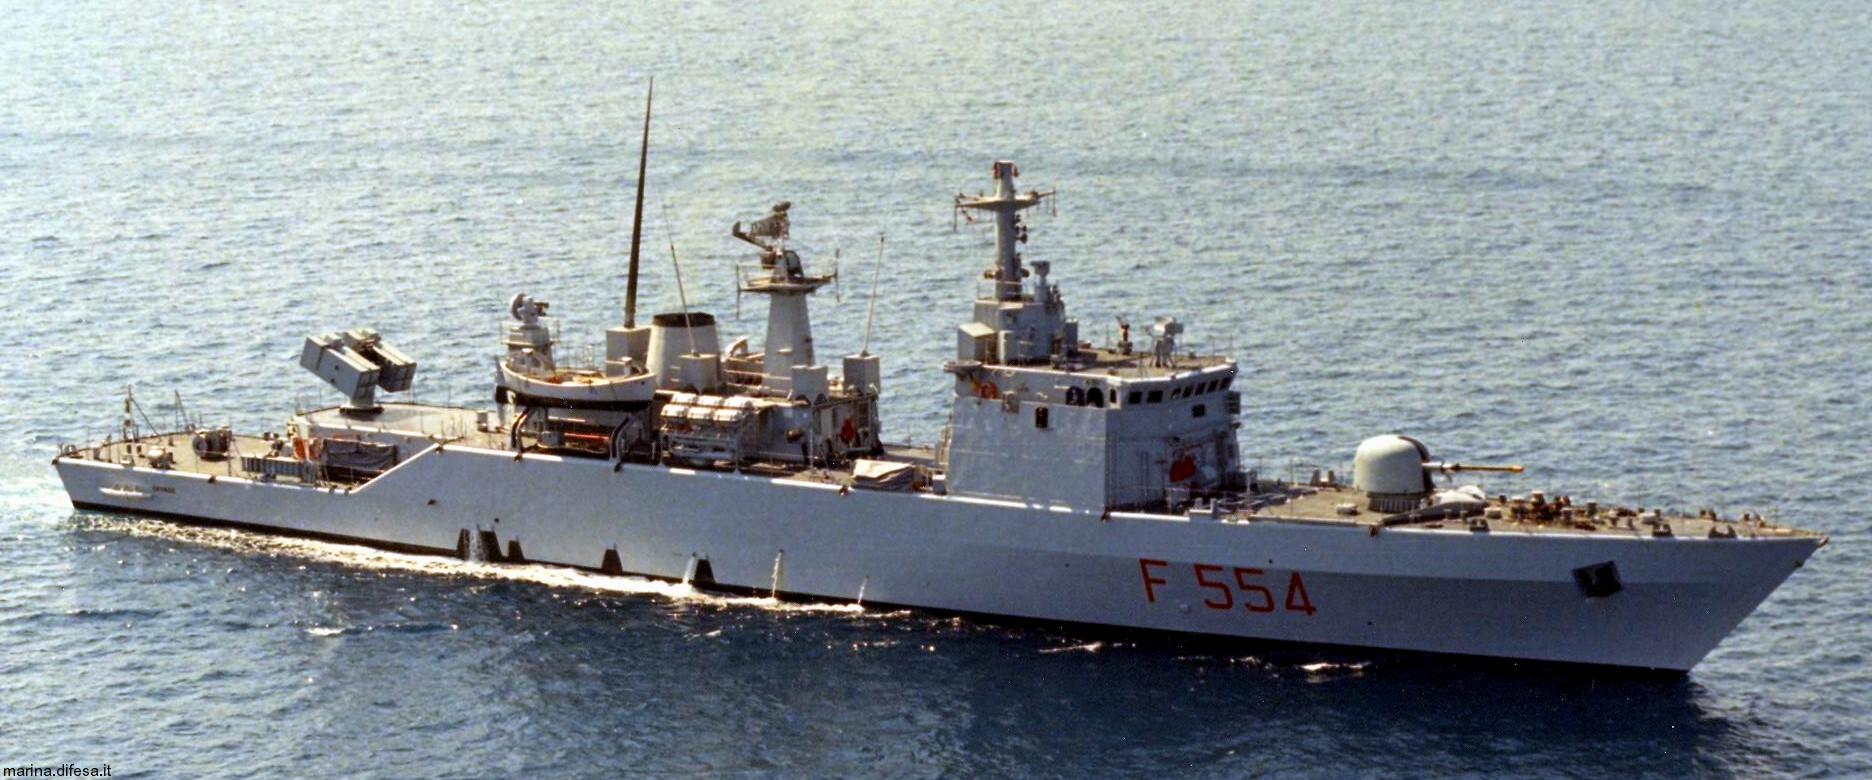 f-554 sfinge nave its minerva class corvette italian navy marina militare 03